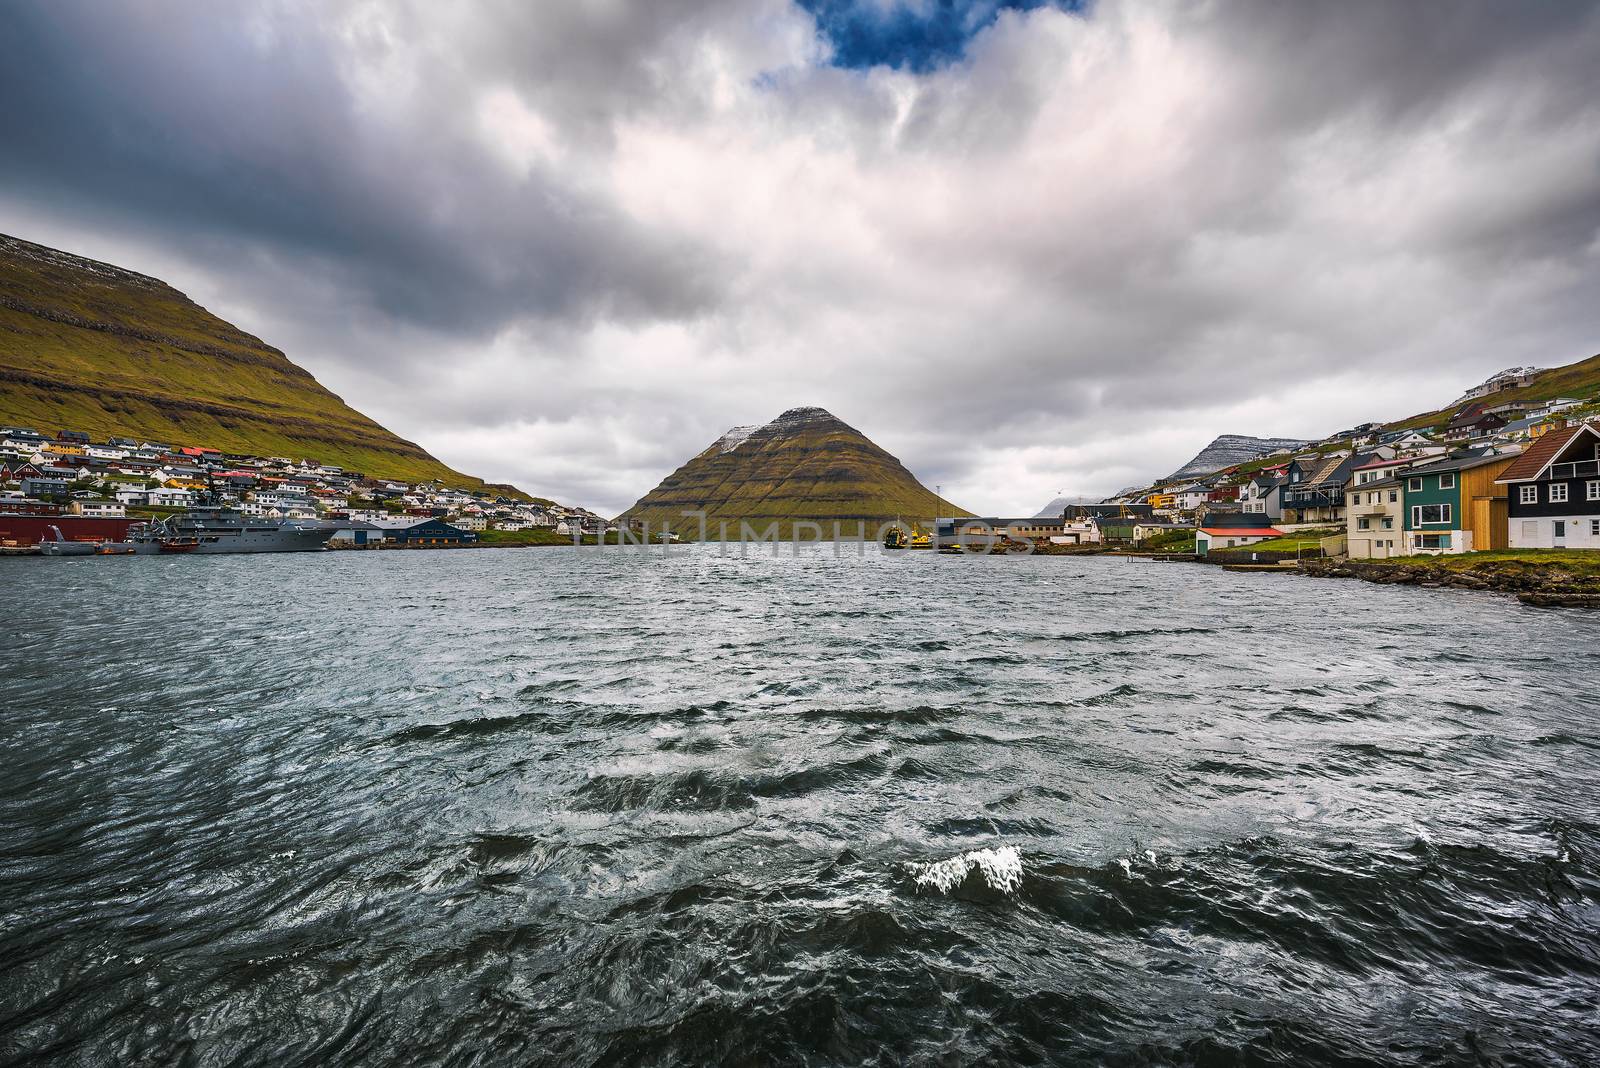 The island of Kunoy viewed from city of Klaksvik in the Faroe Islands, Denmark by nickfox